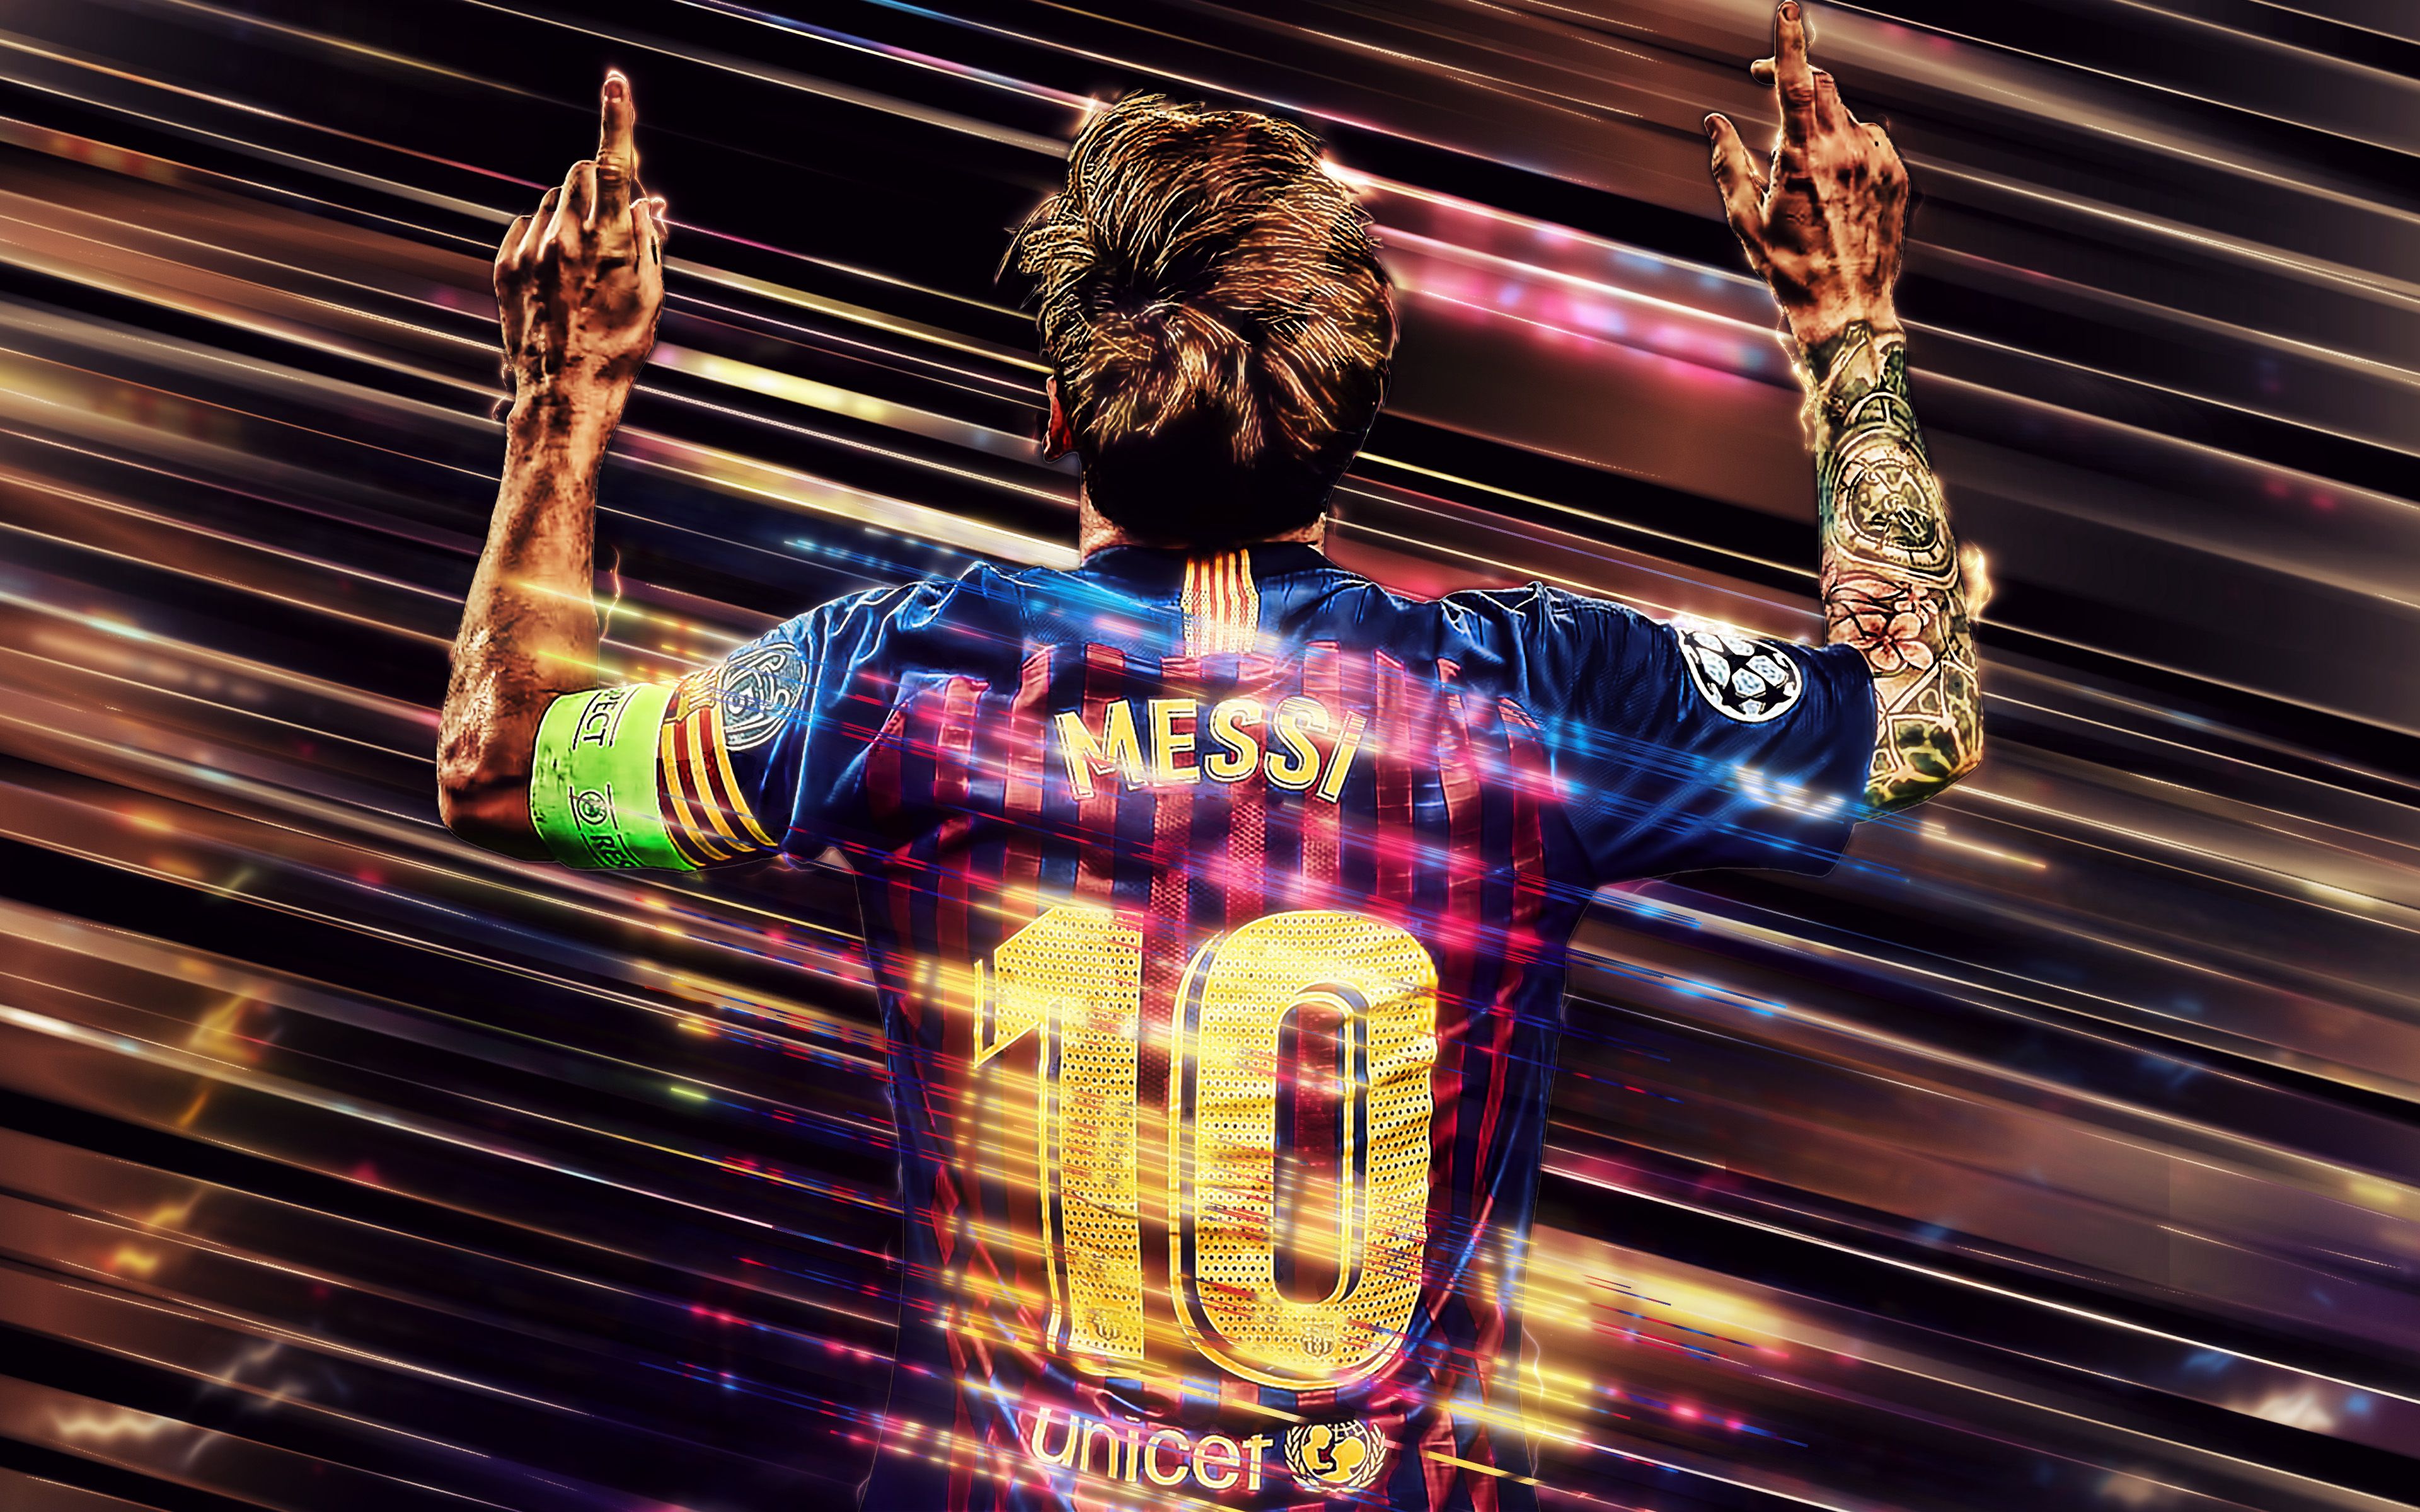 Messi Neon Wallpapers - Wallpaper Cave